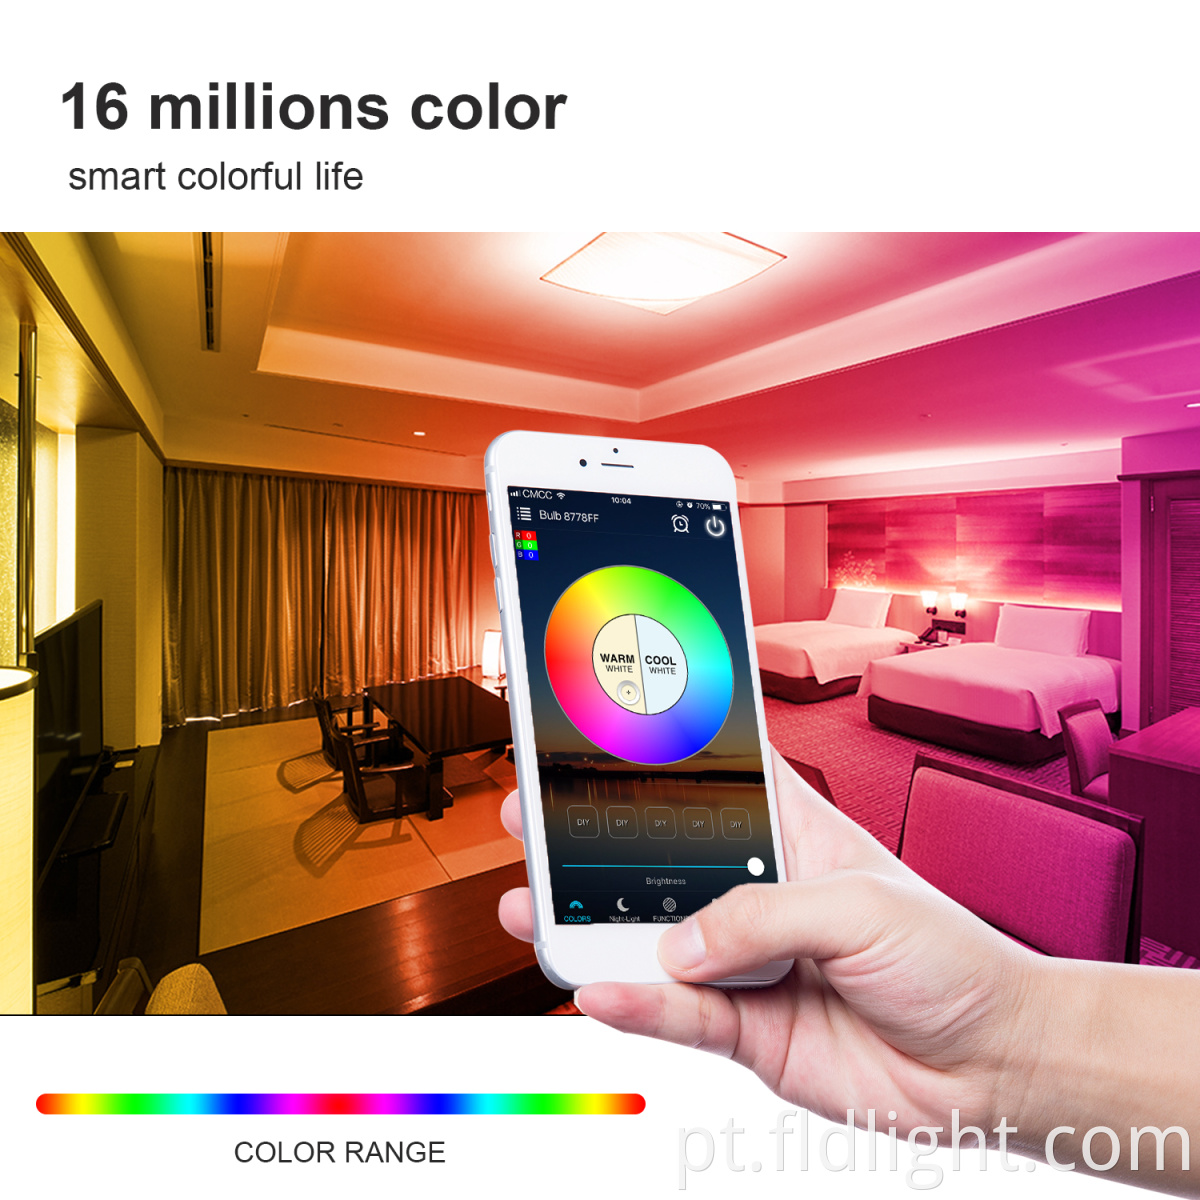 16 millions color smart bulbs